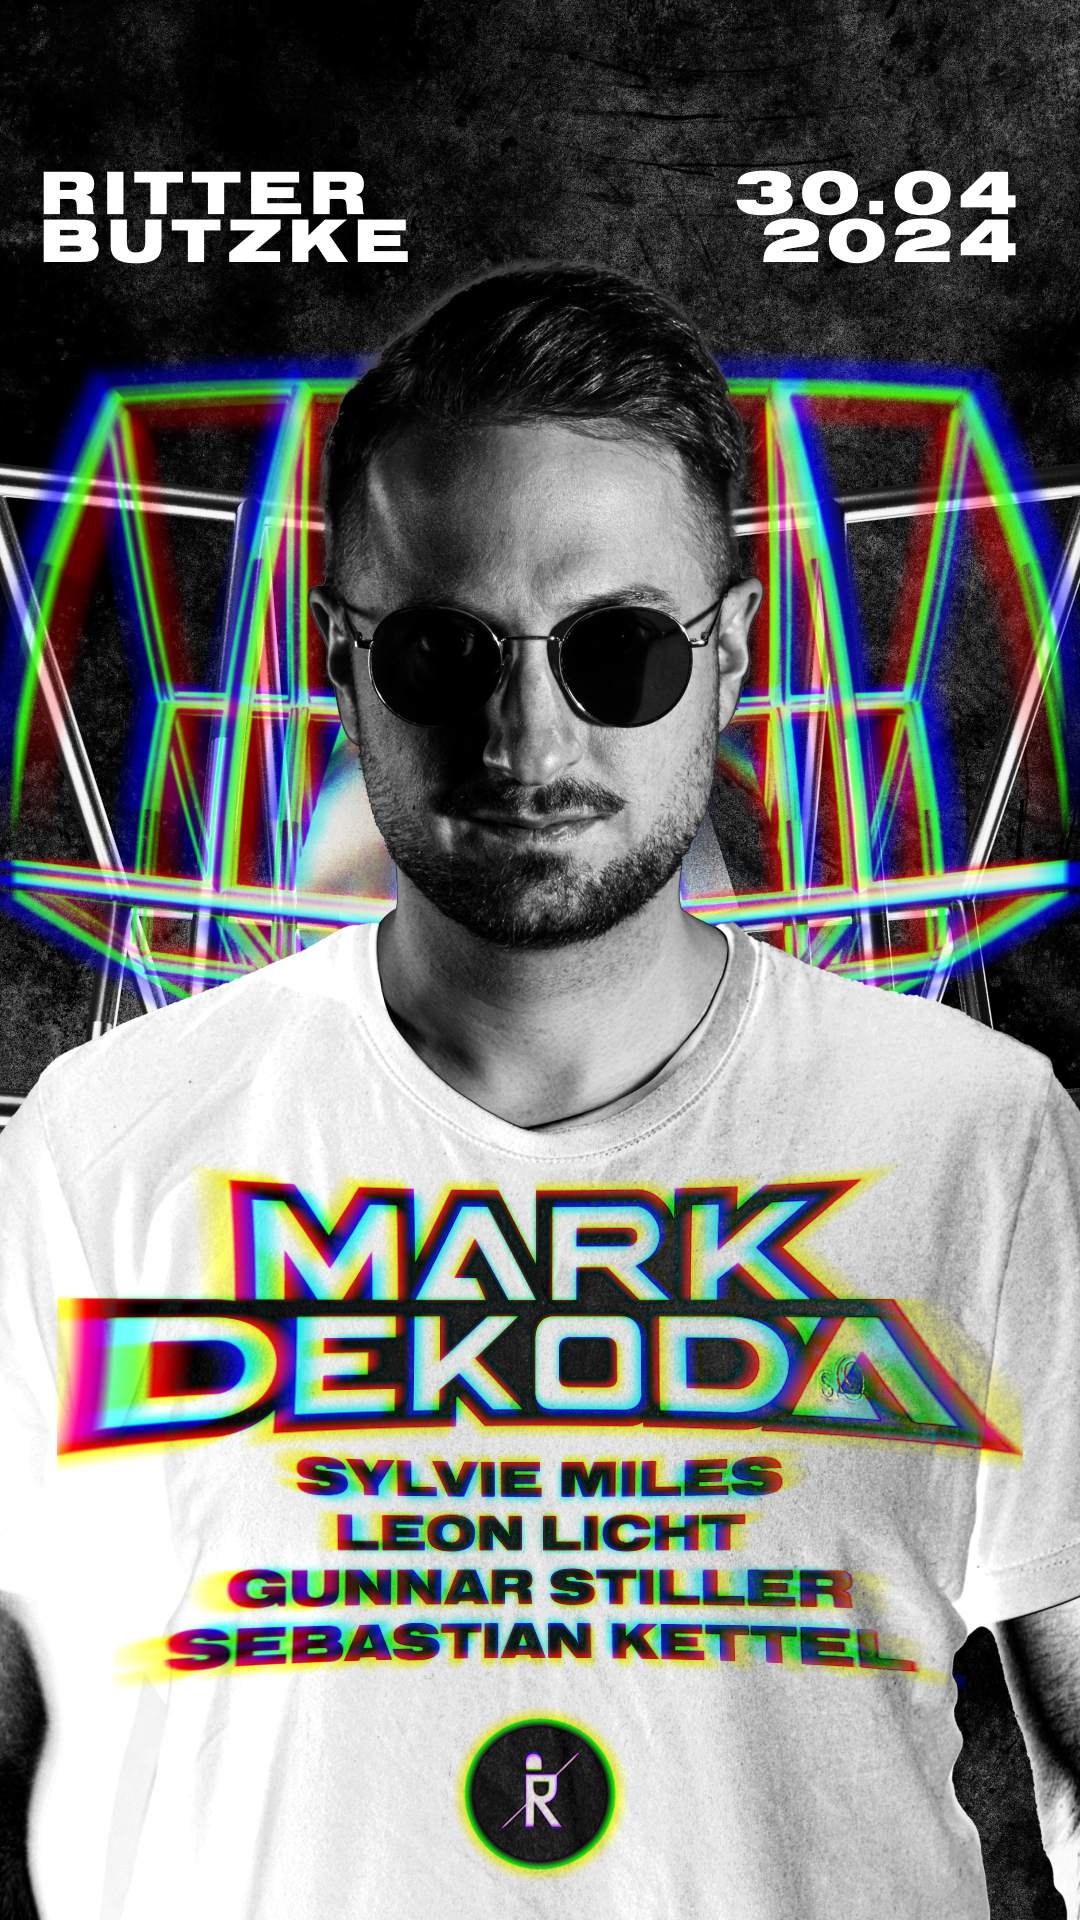 Mark Dekoda - フライヤー裏